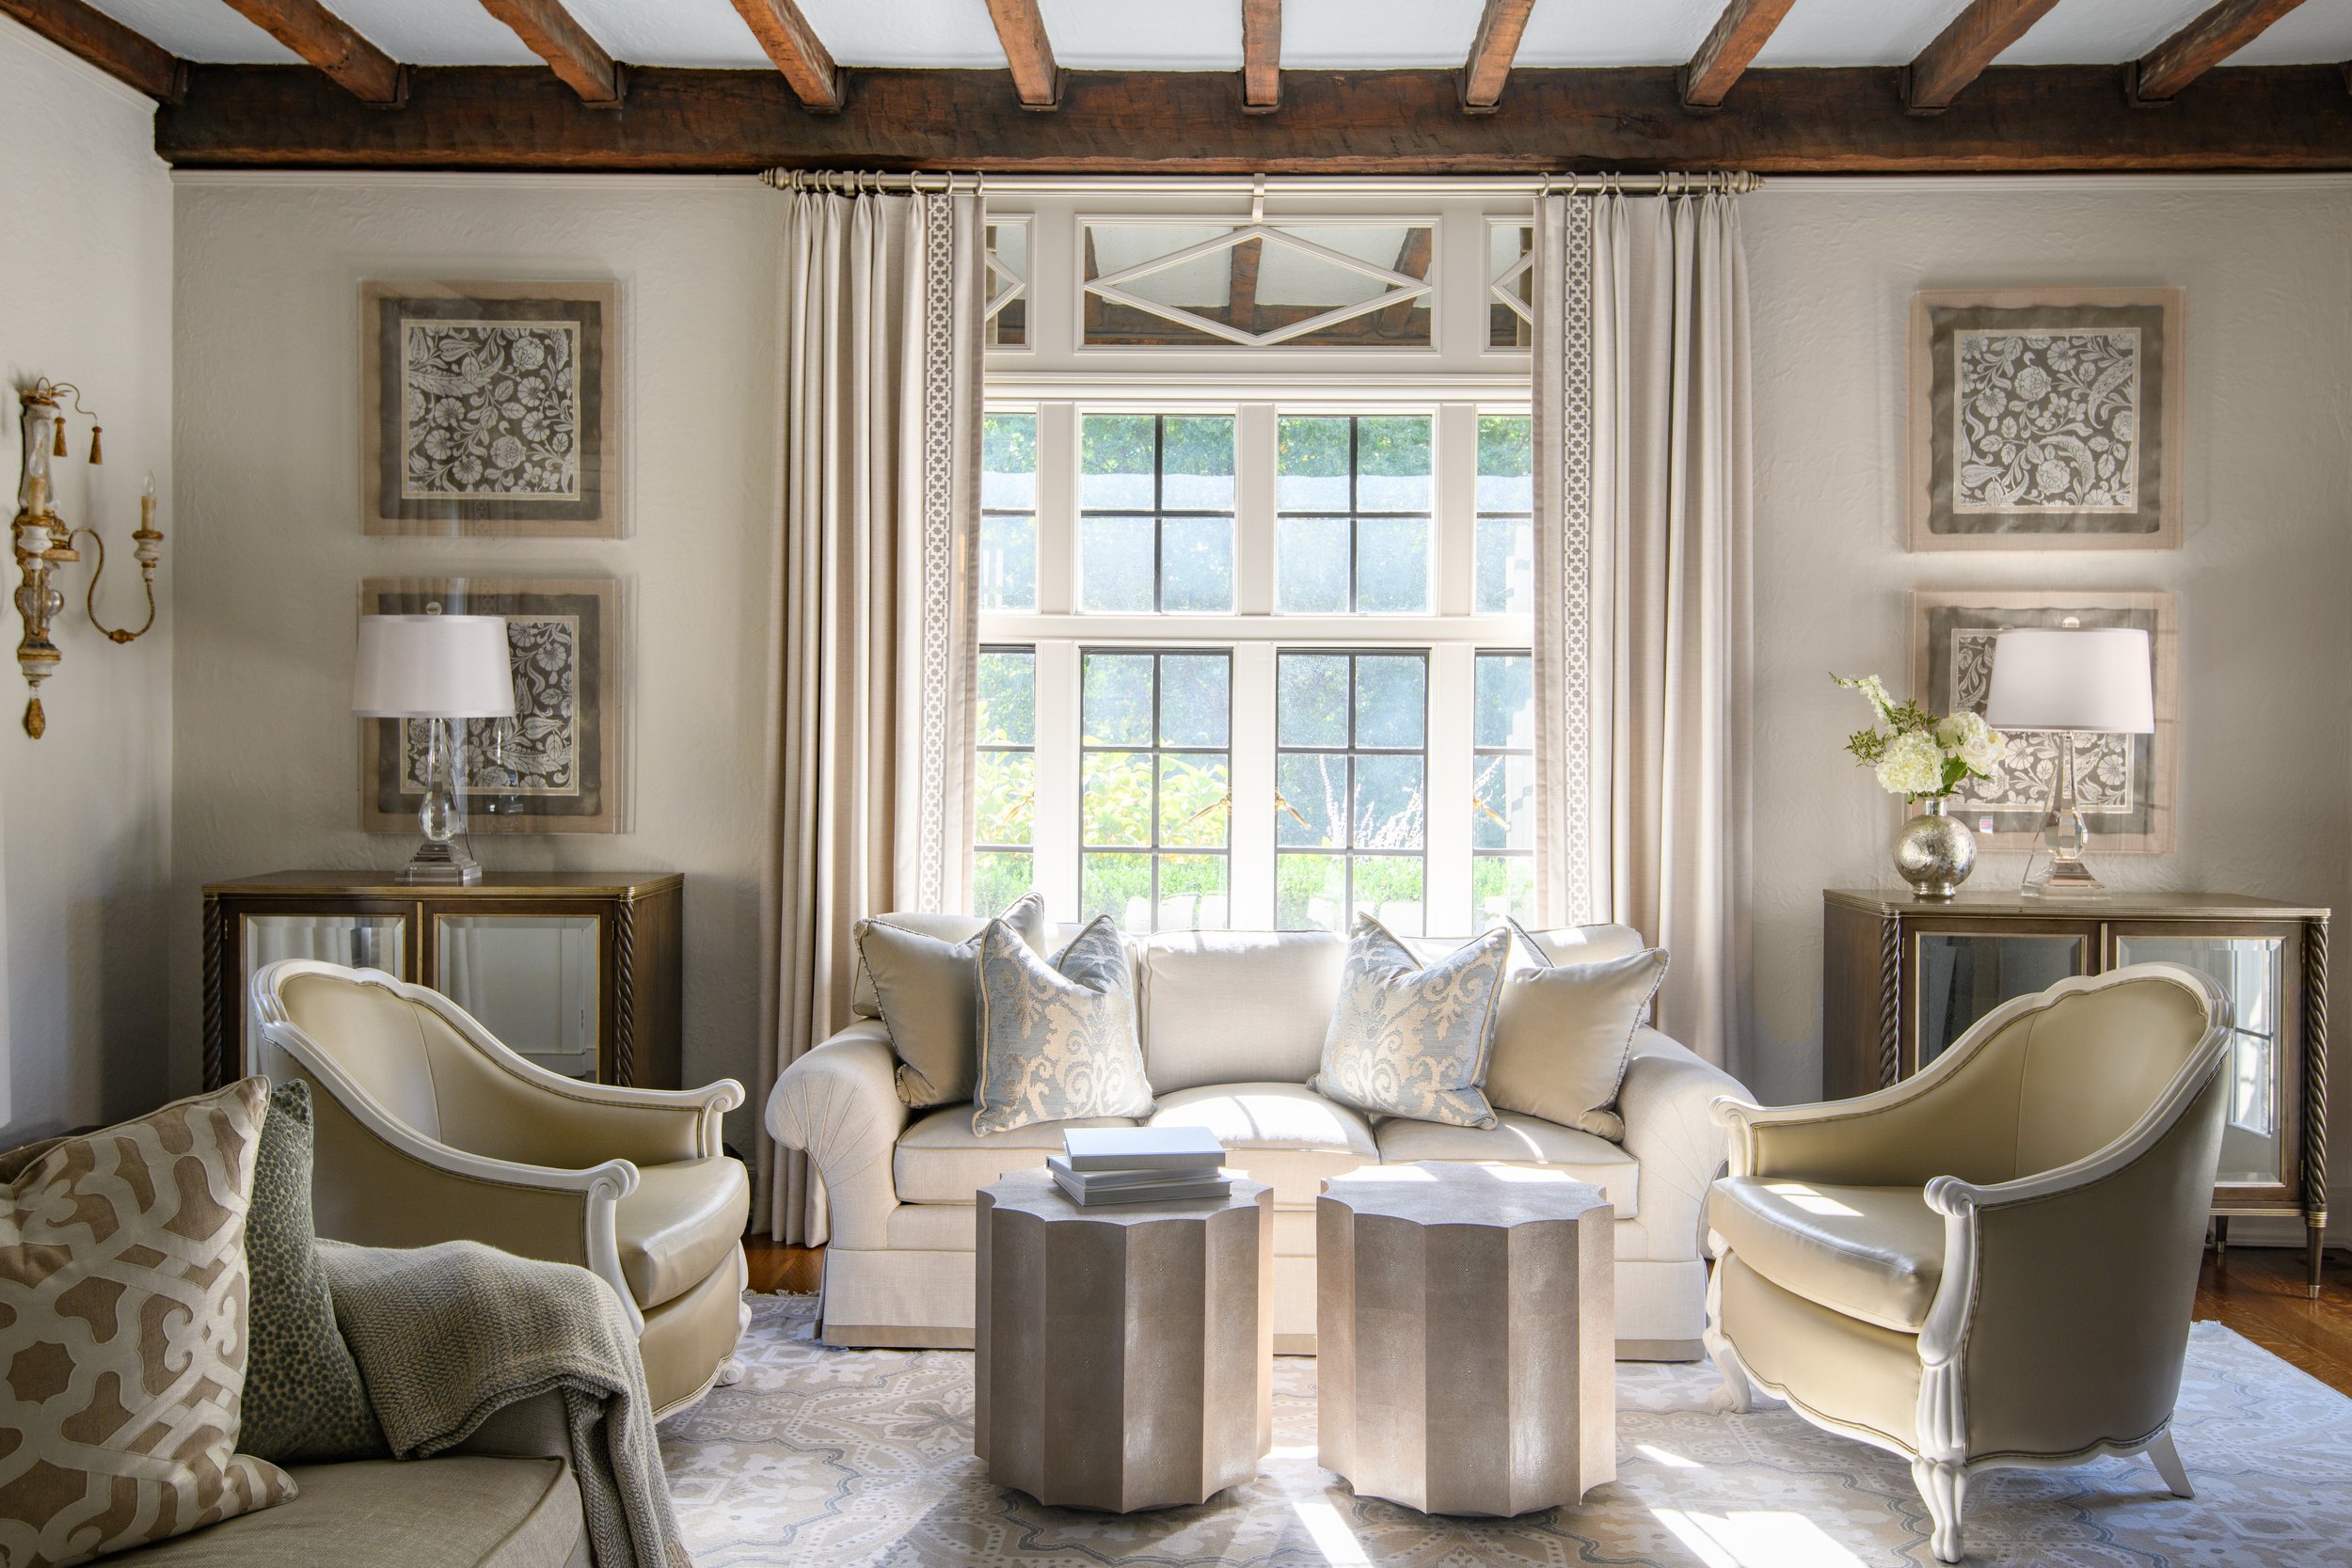 10-large-white-window-warm-seating-chic-patterns-westechester-rinfret-interior-designs.jpg